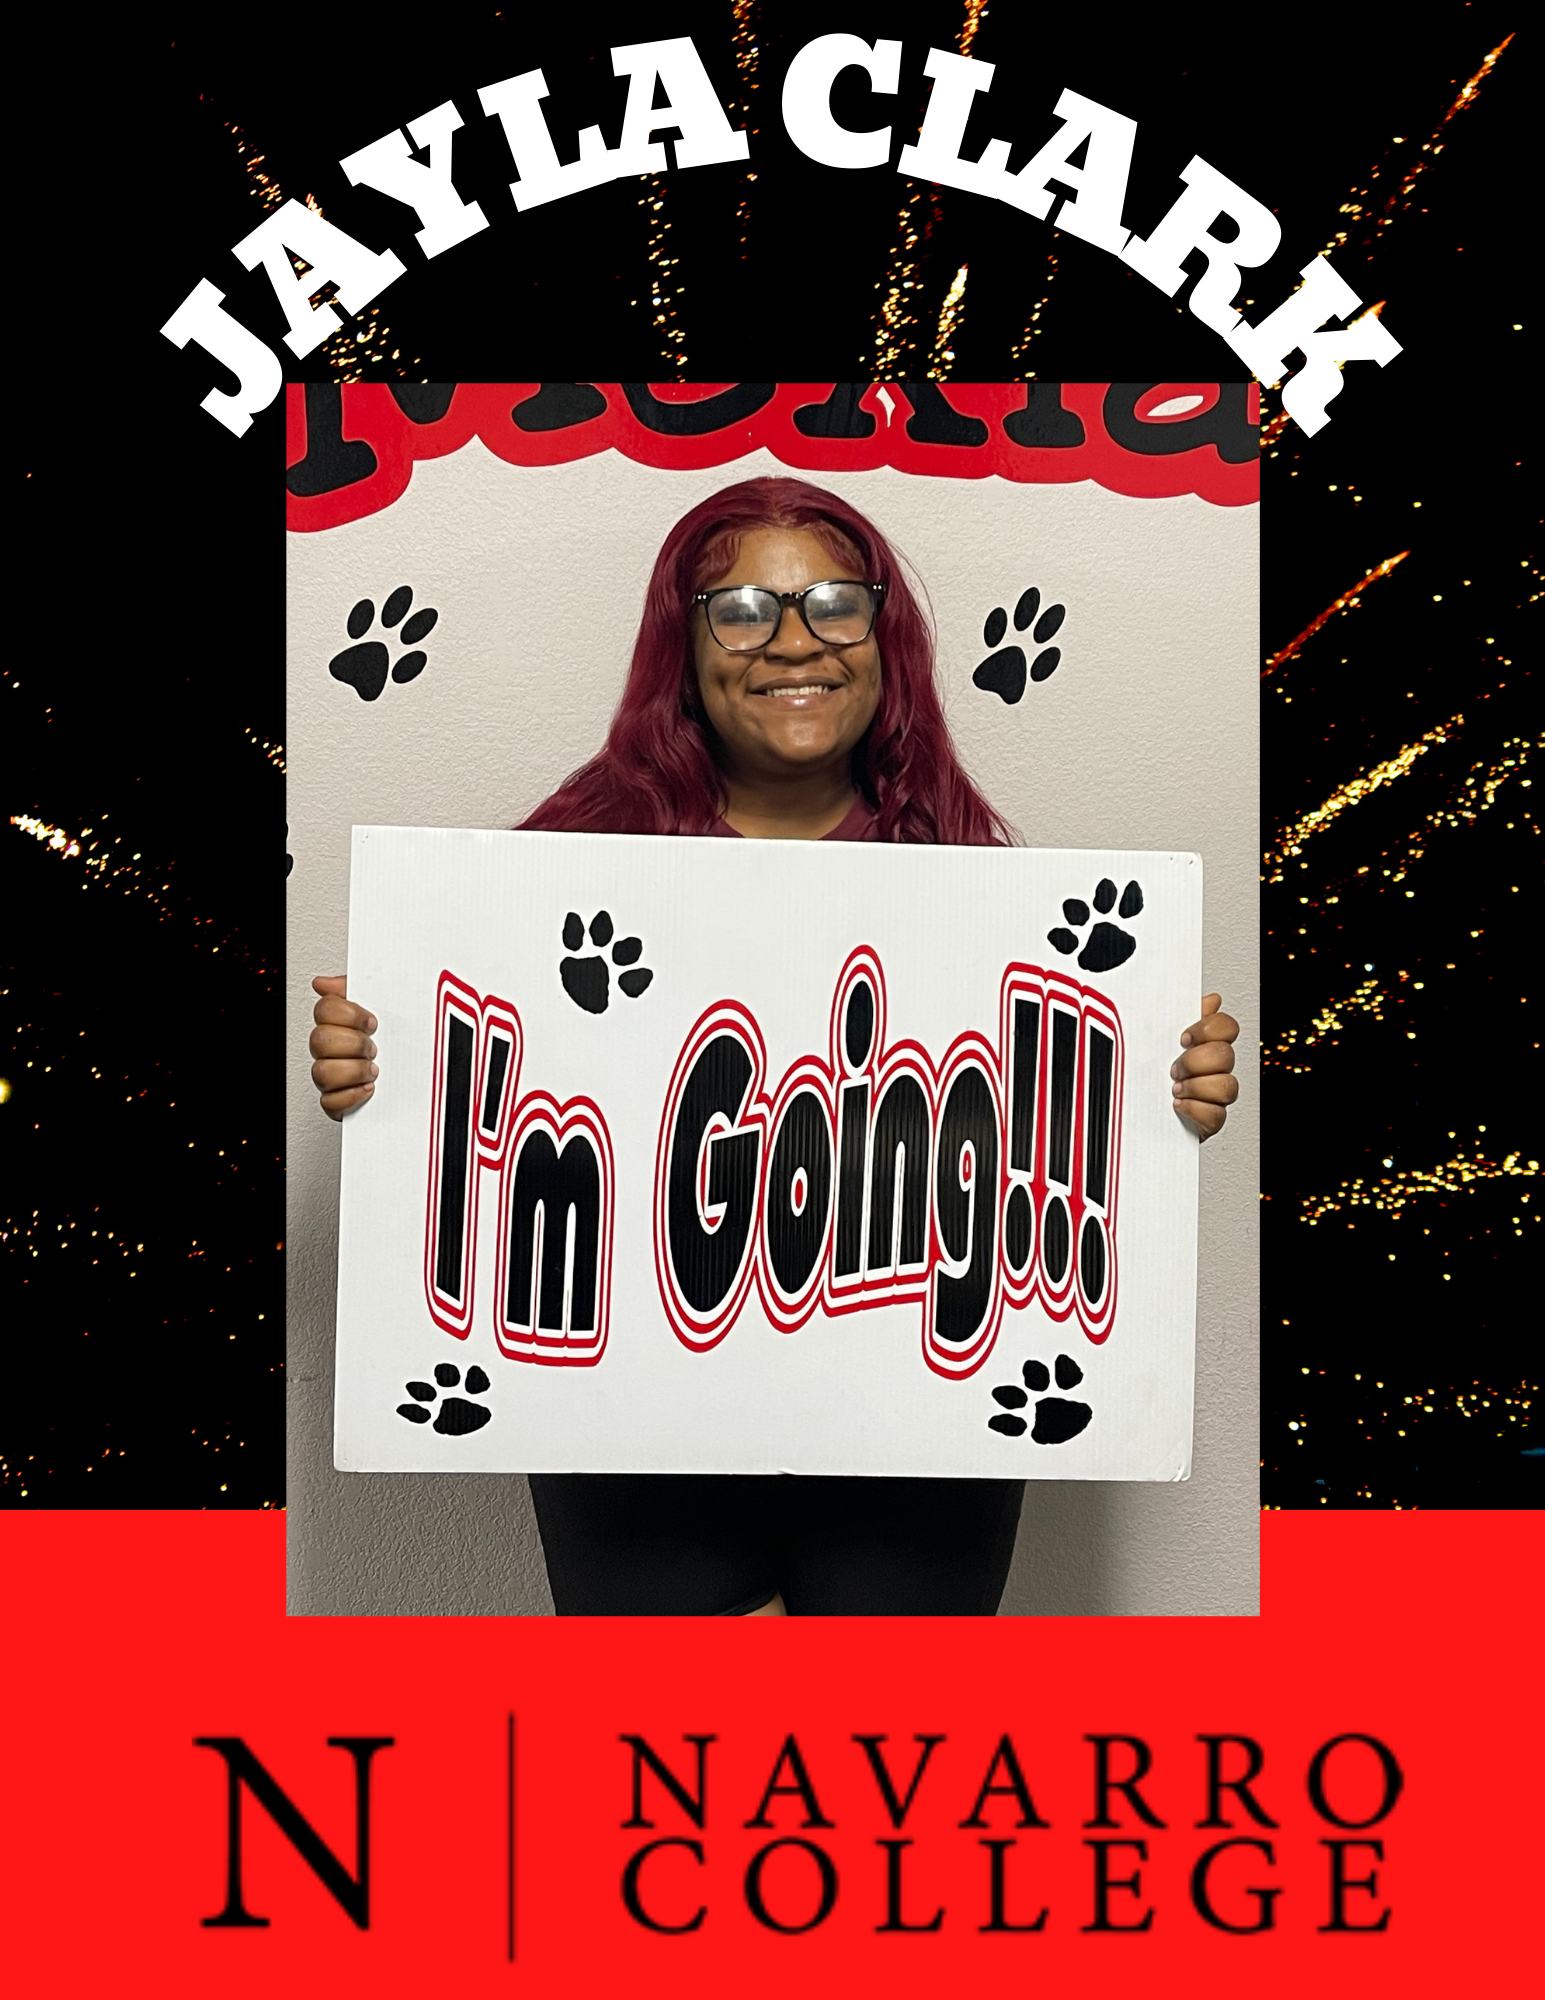 Jayla Clark - I'm Going! - Navarro College